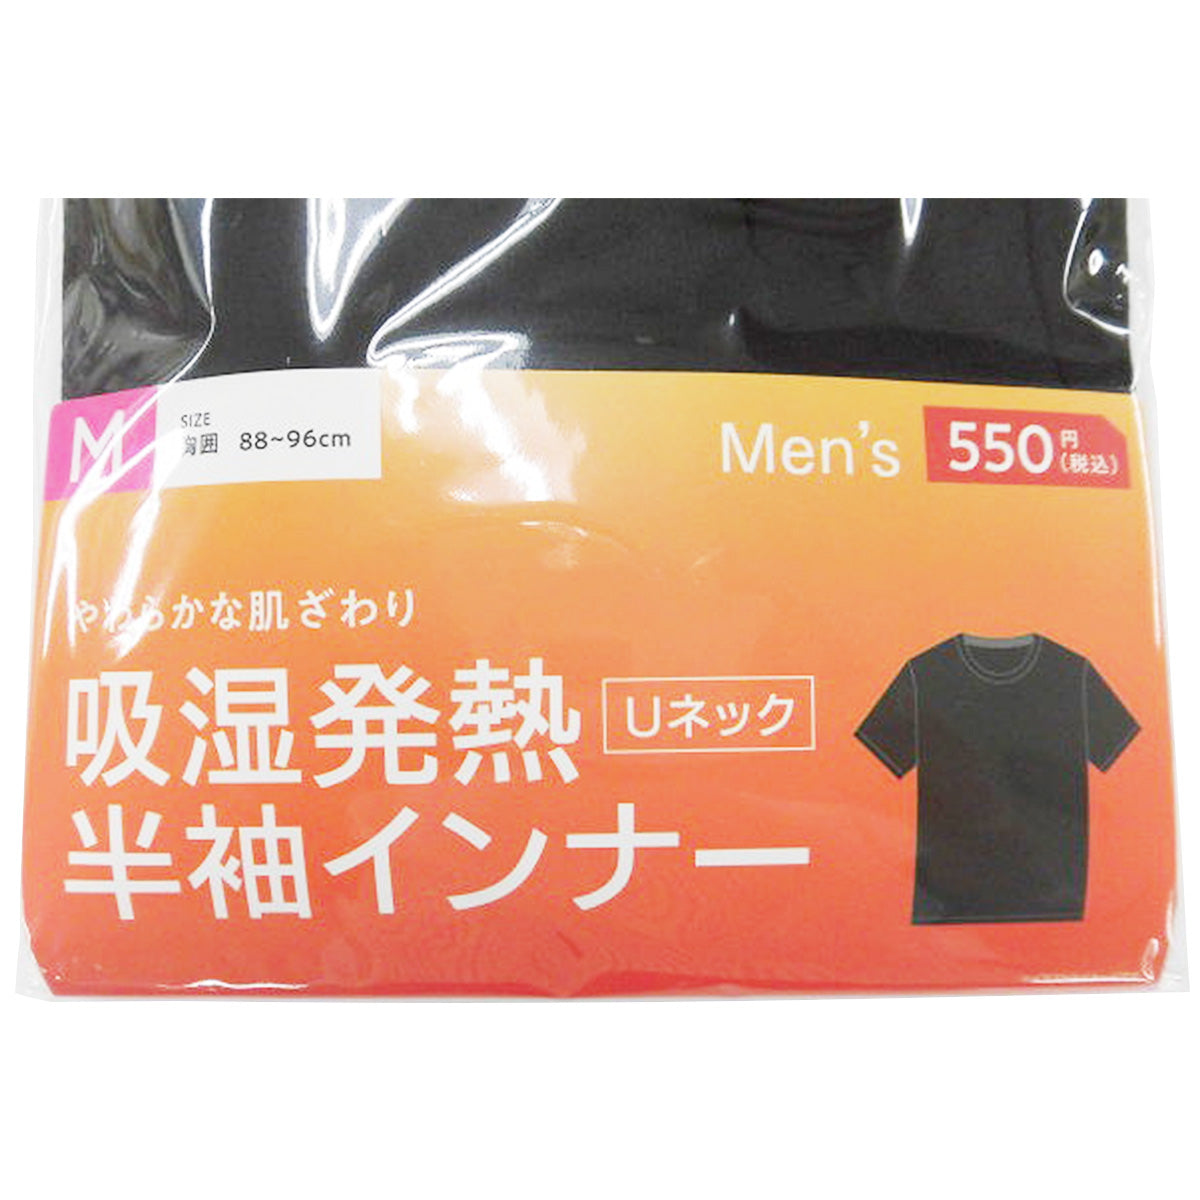 Tシャツ 吸湿 下着 半袖シャツ 紳士 メンズ用インナー レーヨン M 304323